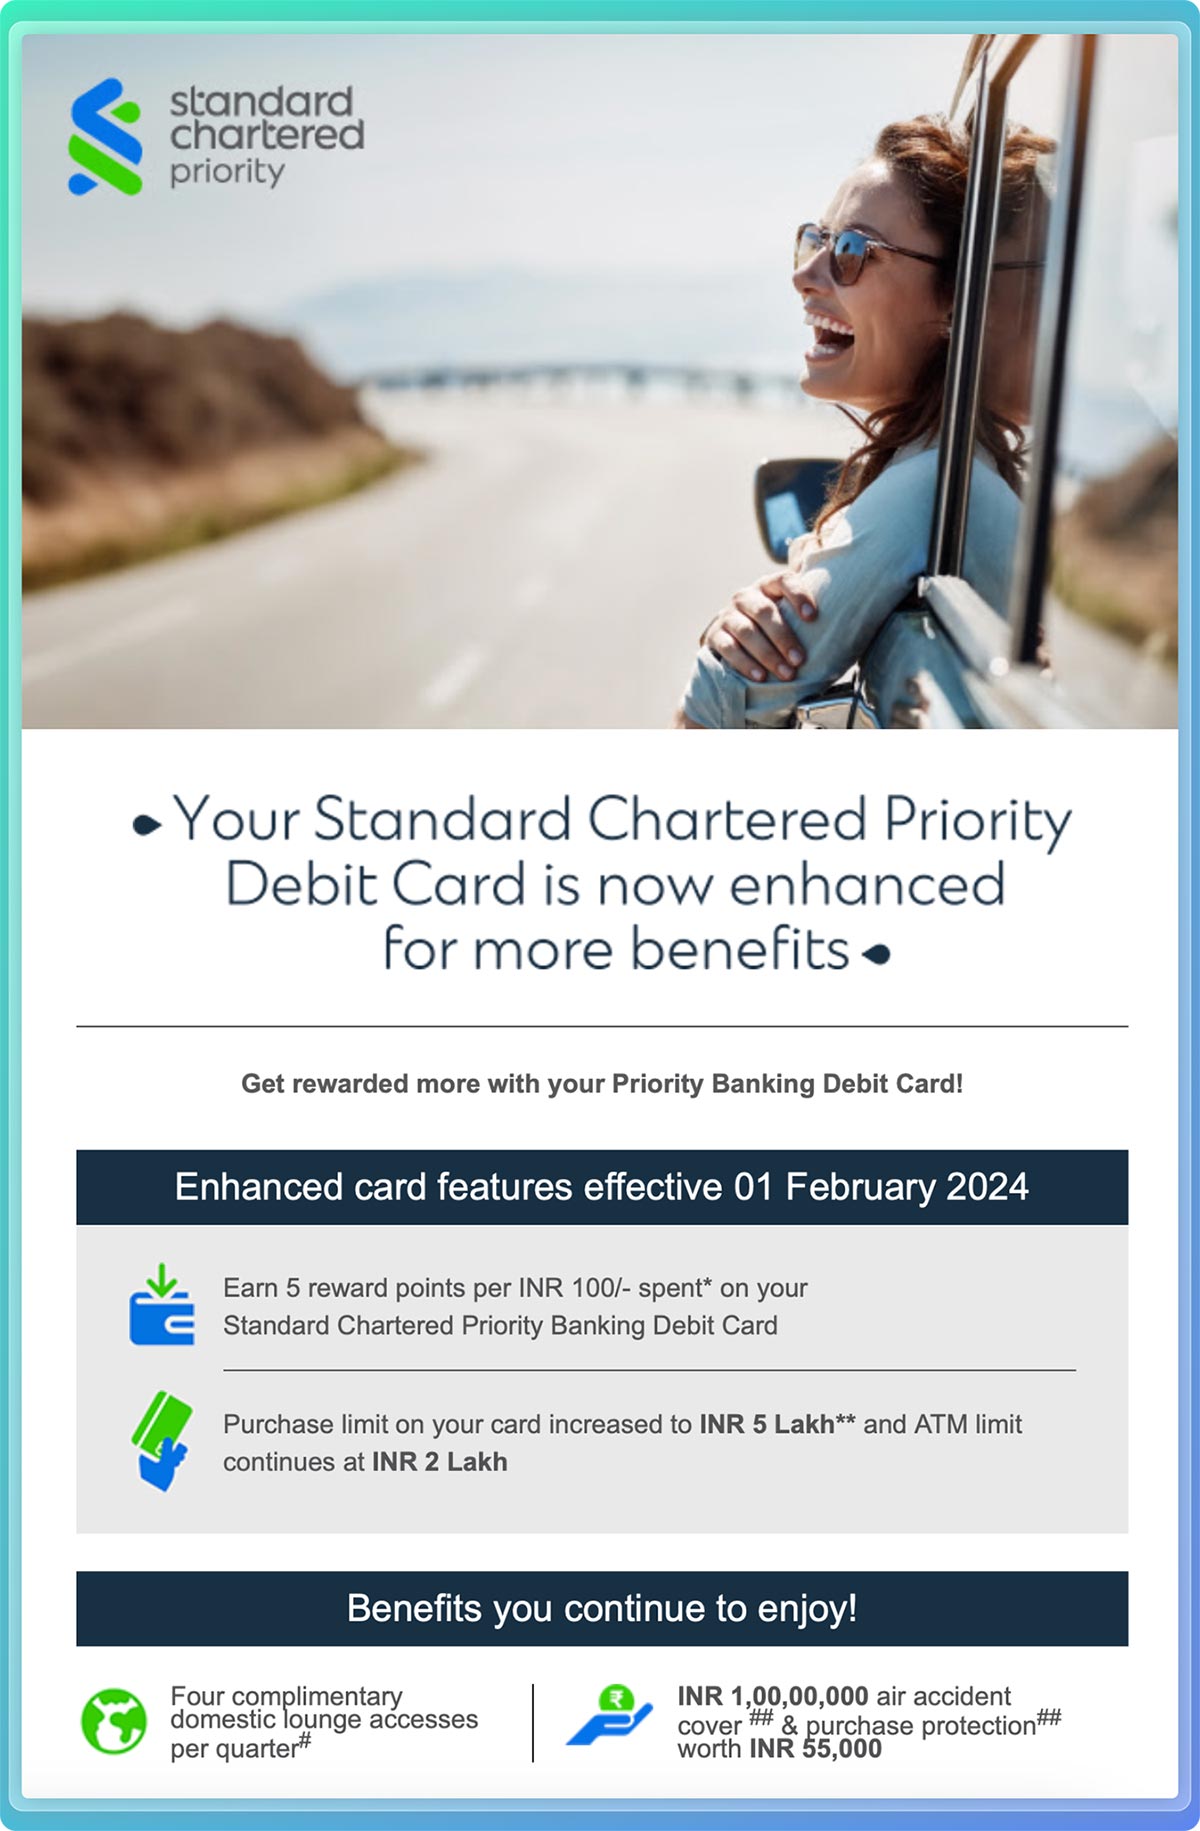 Standard Chartered Priority Infinite Debit Card benefits revision